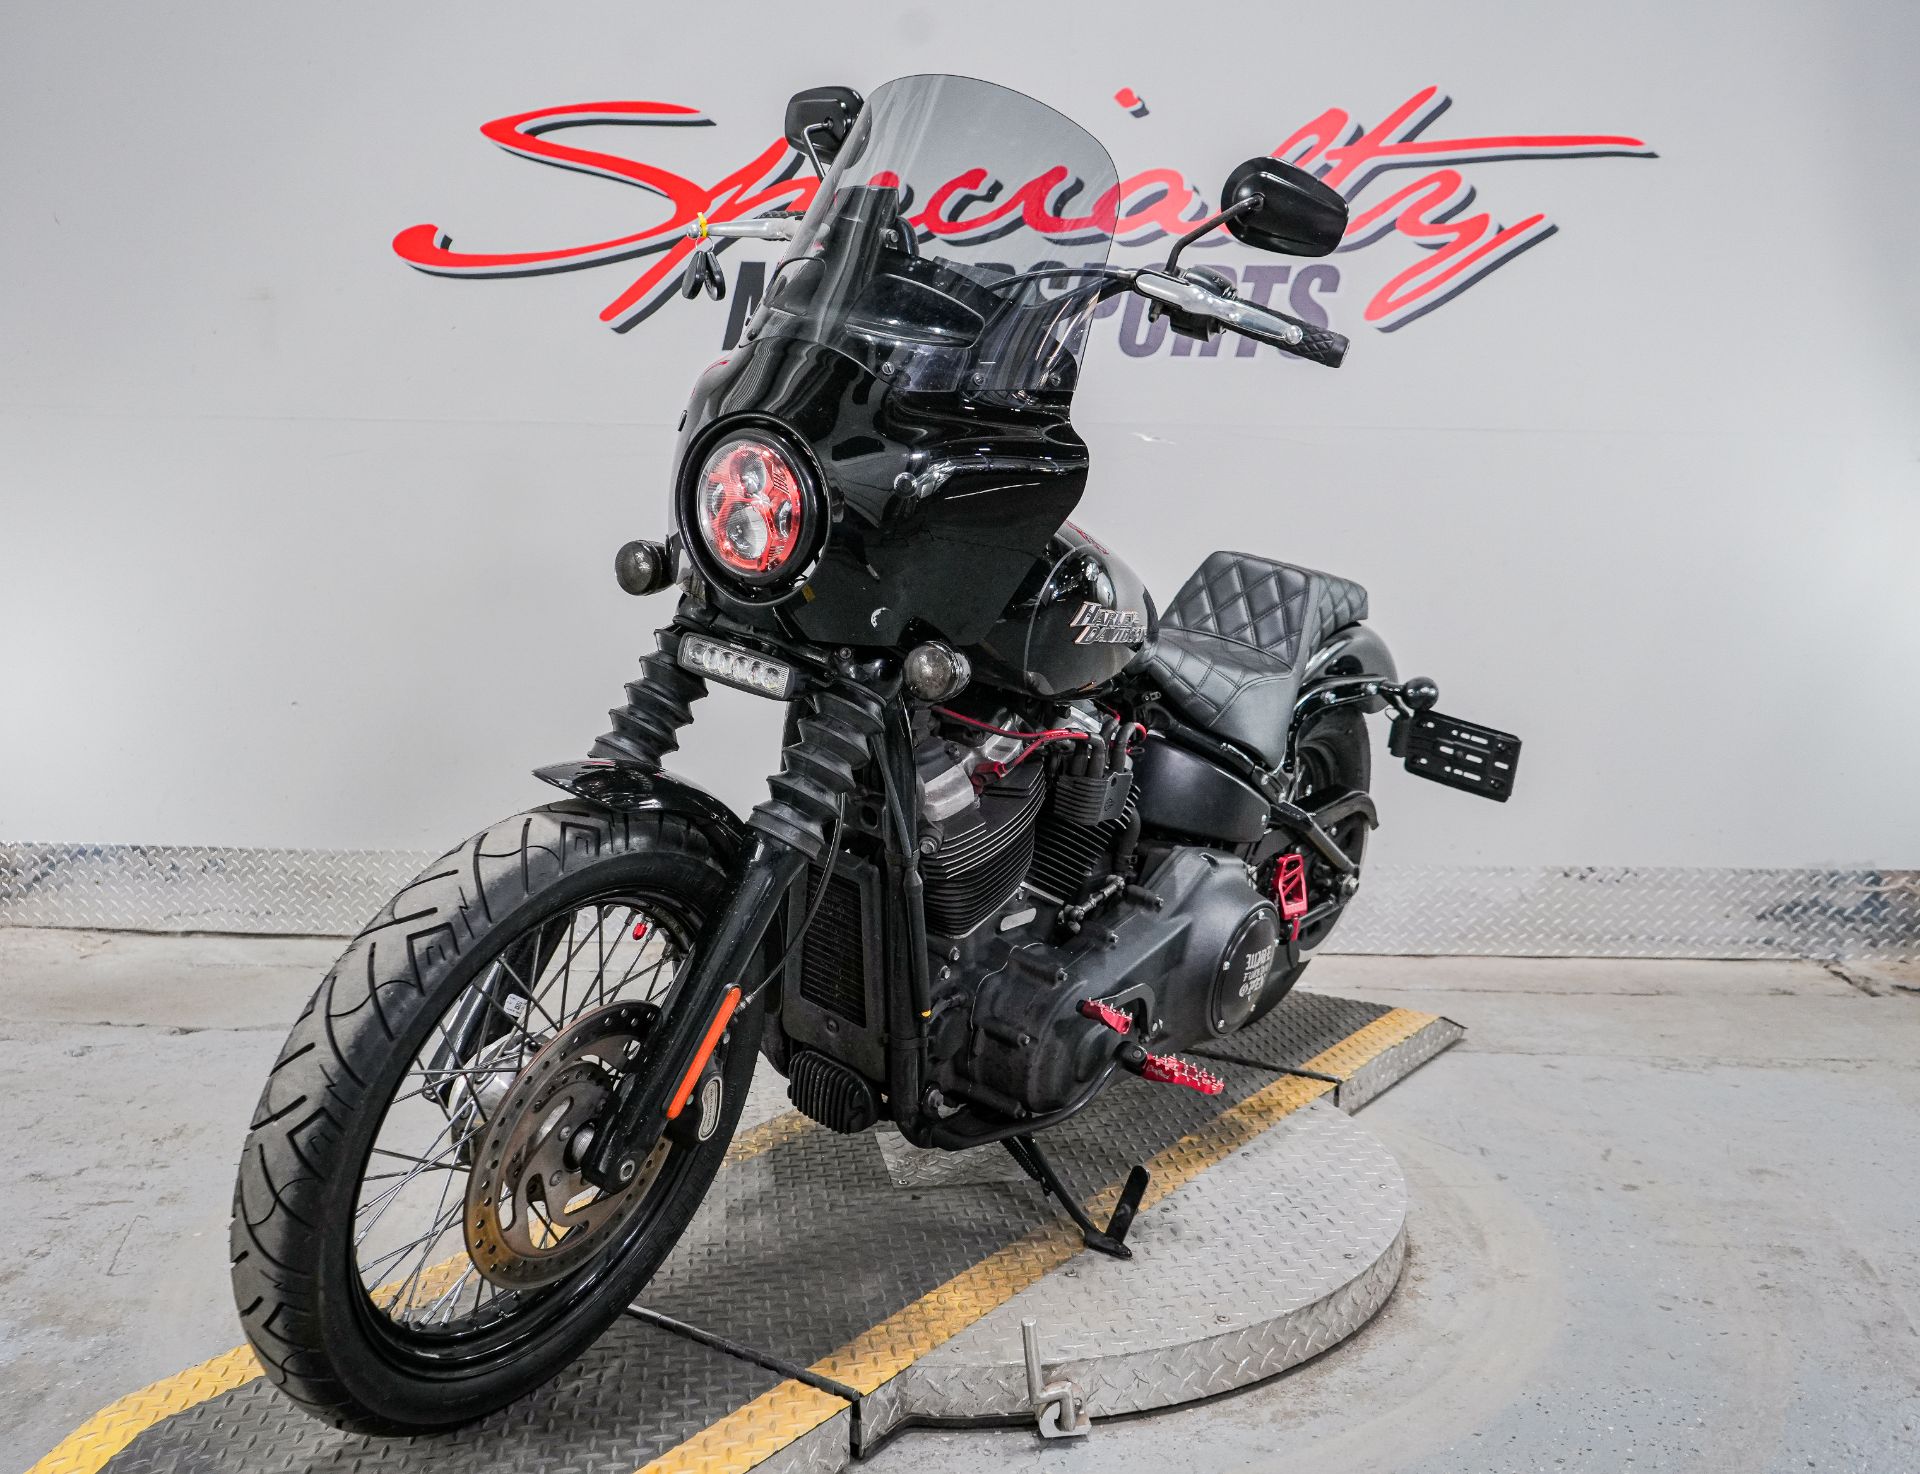 2018 Harley-Davidson Street Bob® 107 in Sacramento, California - Photo 7